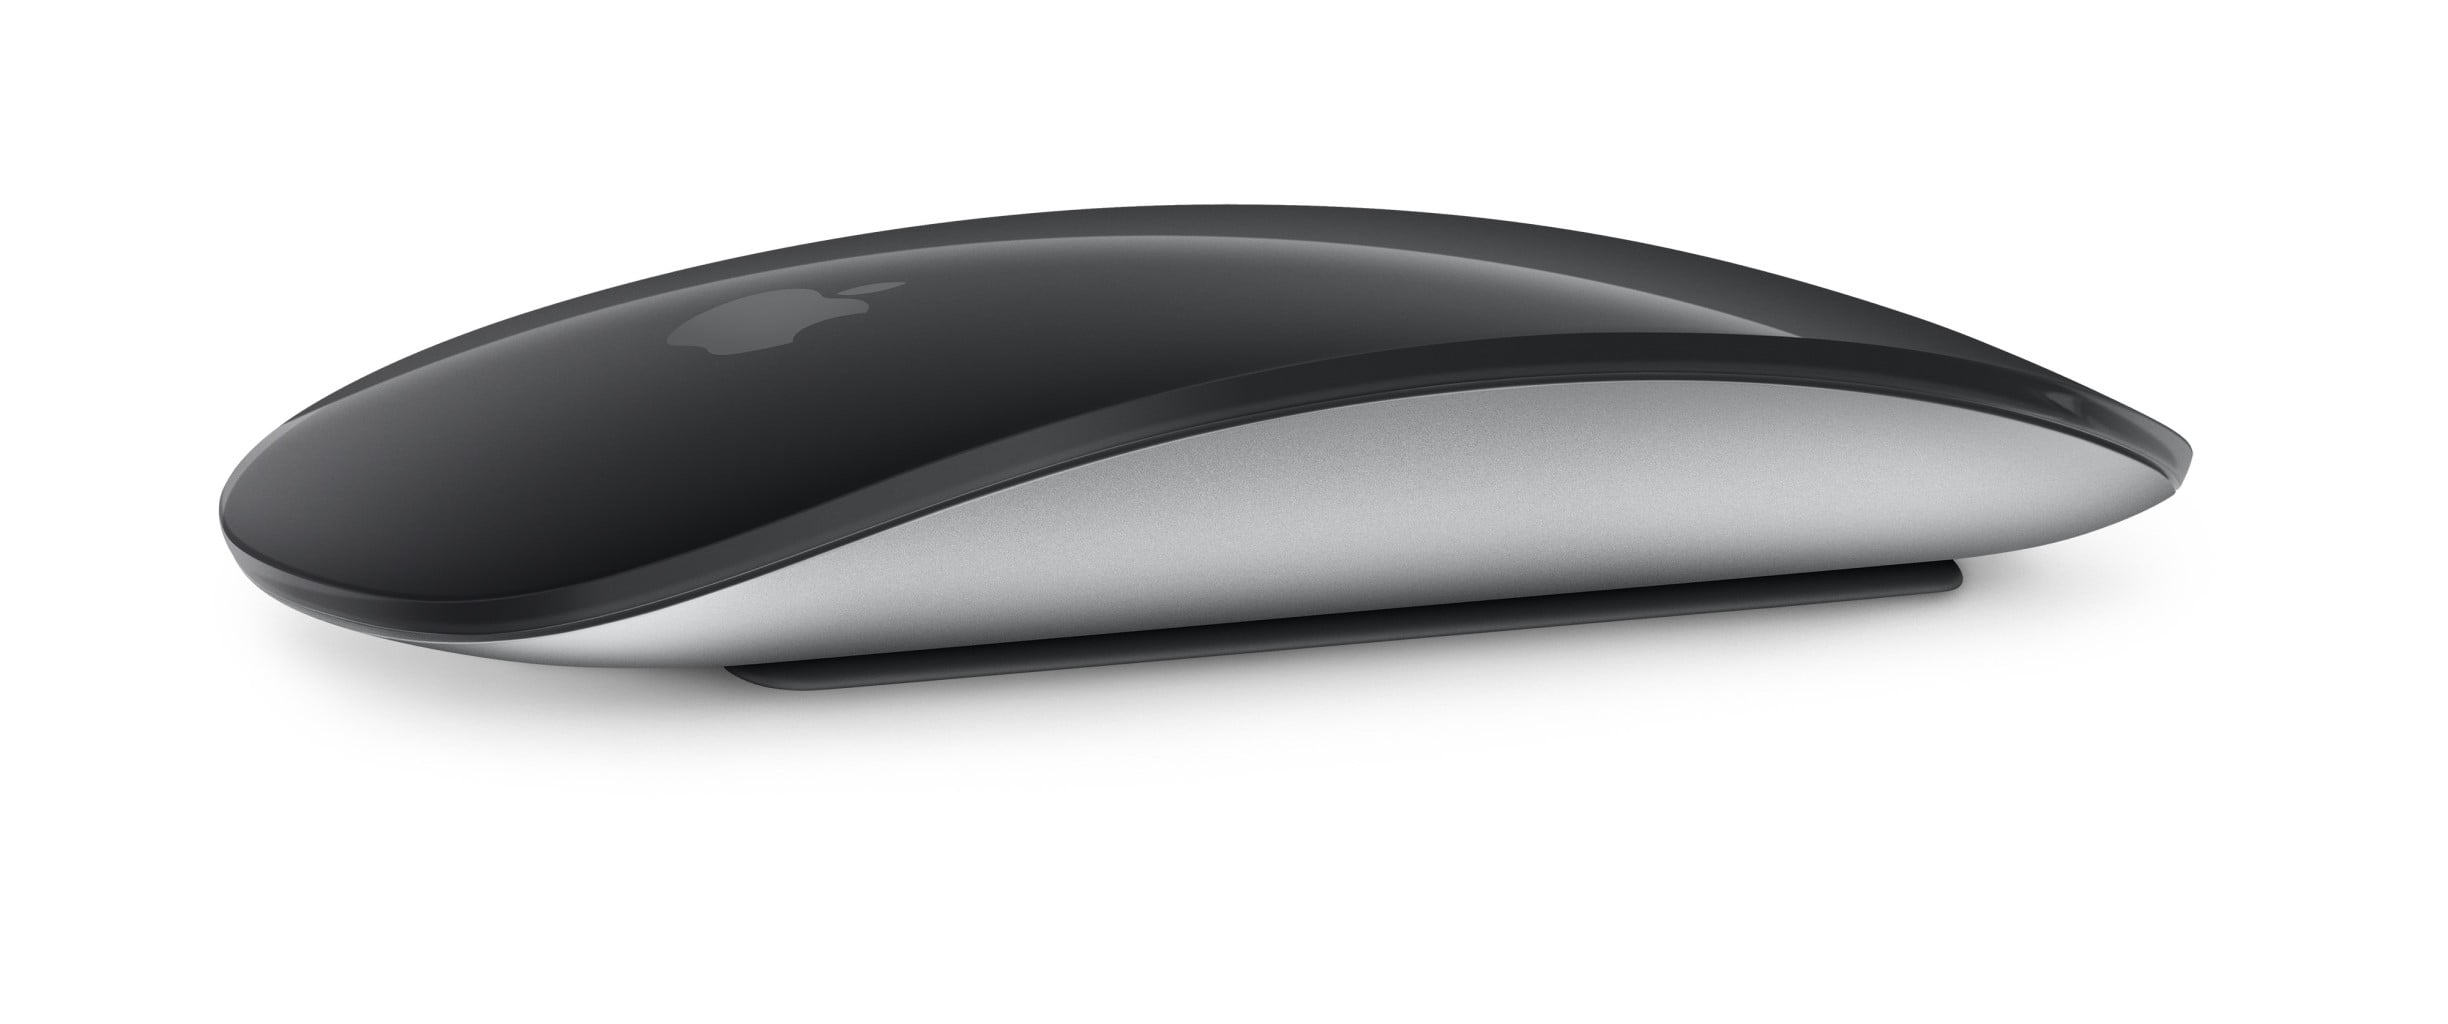 Magic Mouse - Black Multi-Touch Surface - Walmart.com